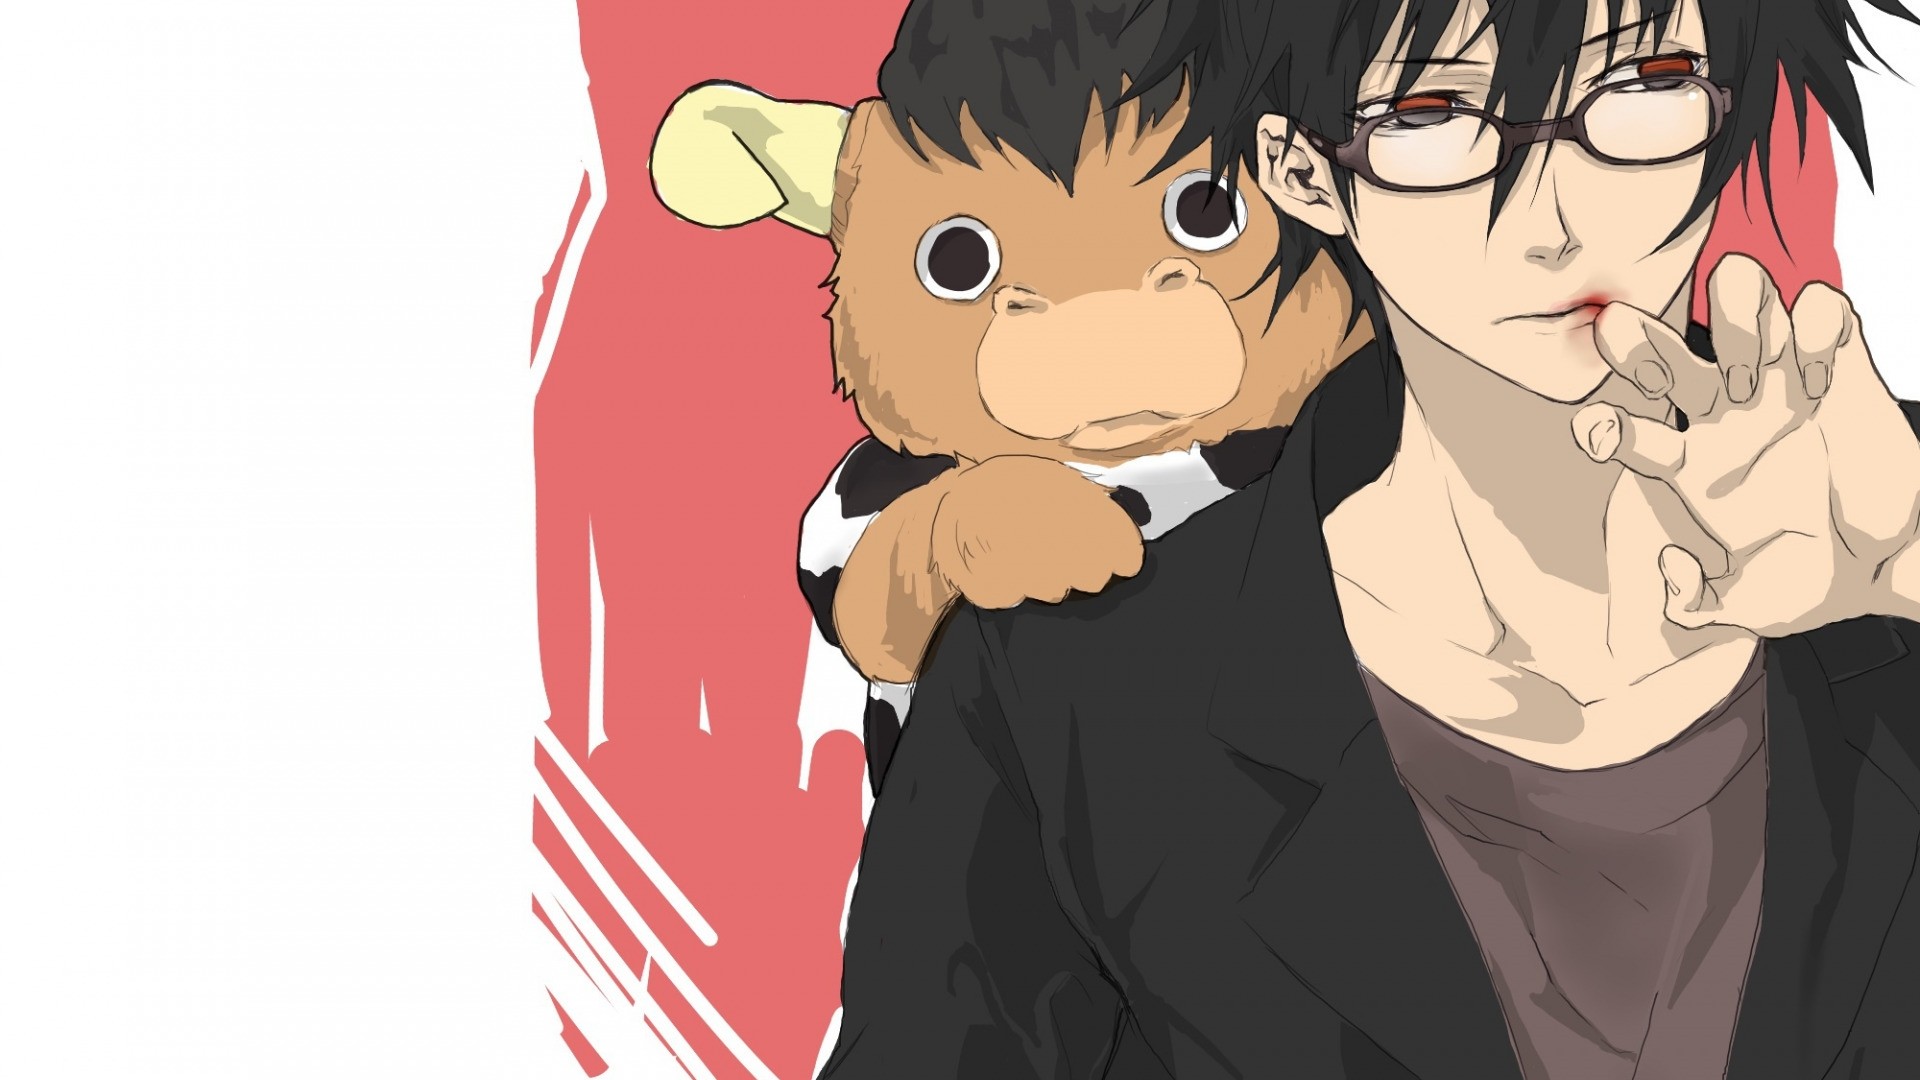 Anime Boy With Glasses - haleem post - Imgur